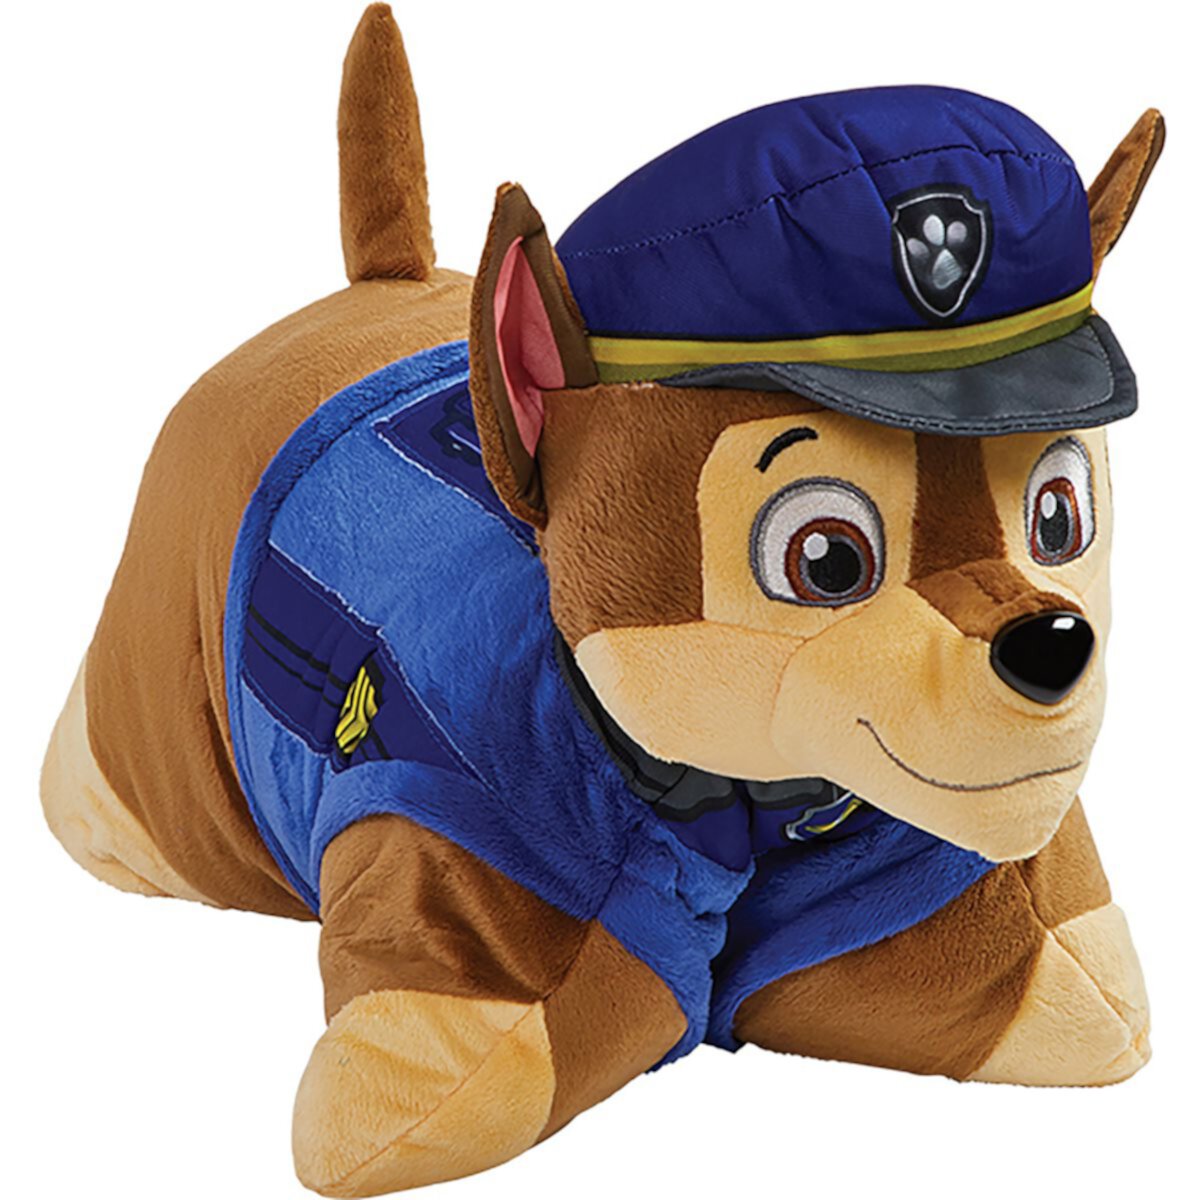 Подушка Pets Nickelodeon Paw Patrol Chase -Большая Pillow Pets